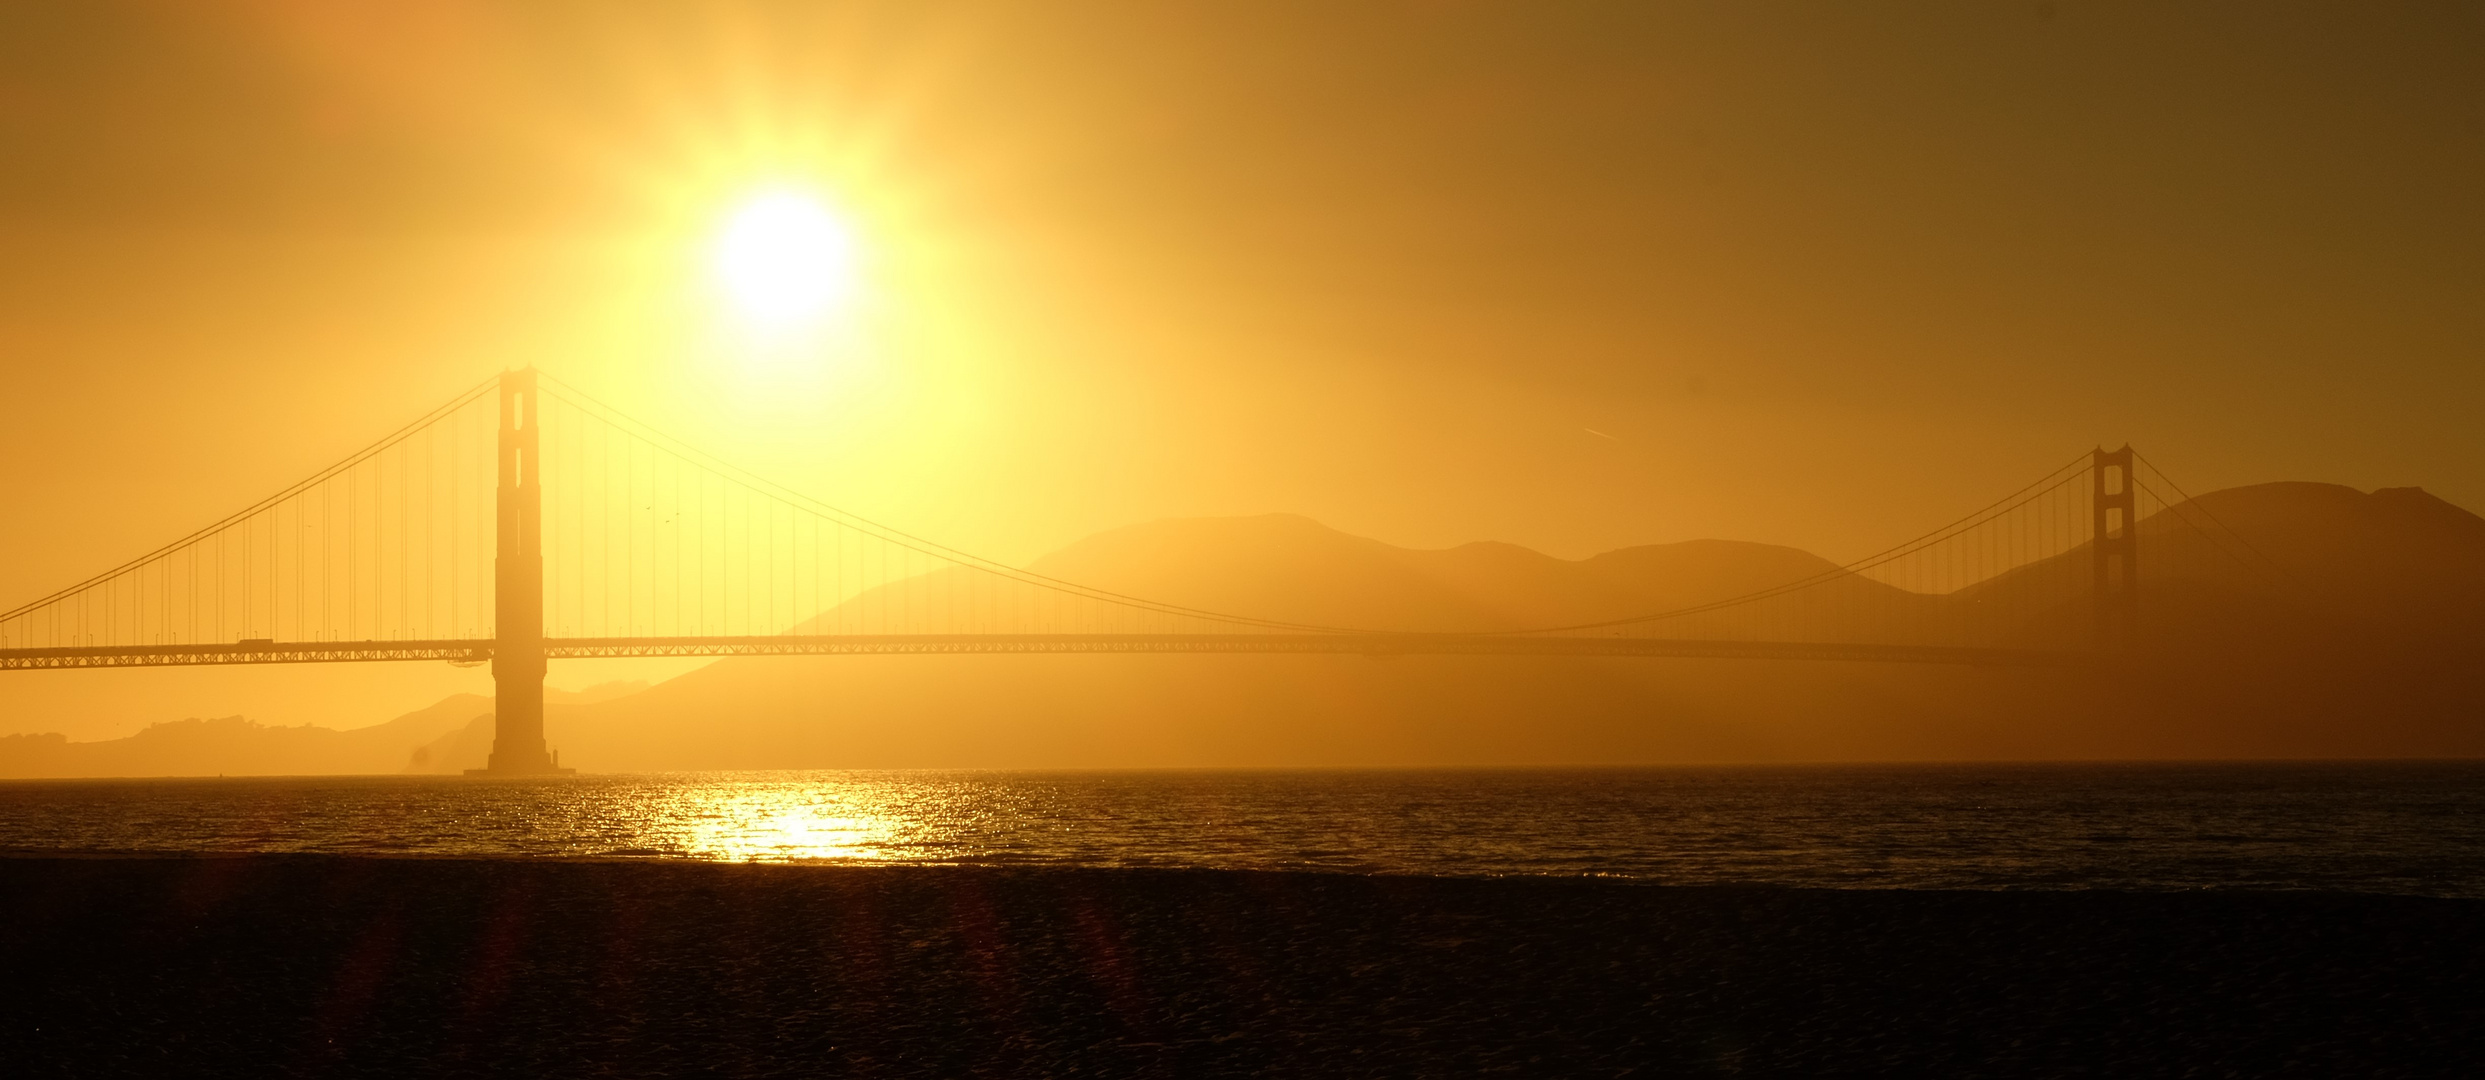 Golden Gate im goldenen Sonnenuntergang